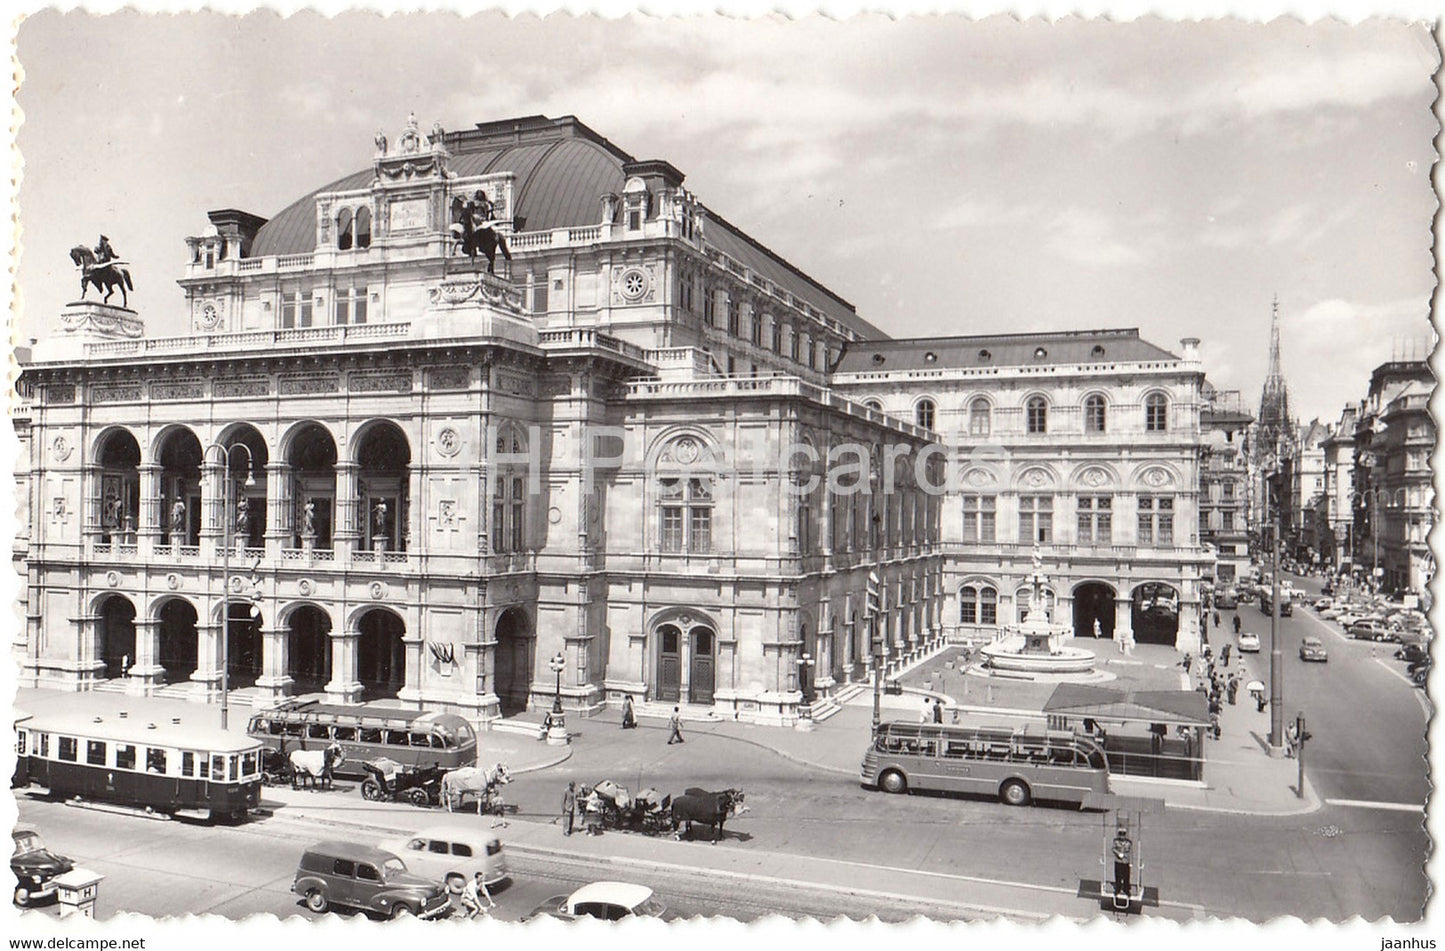 Wien - Staatsoper mit Kartnerstrasse - Vienna - tram - bus - car - old postcard - 1958 - Austria - used - JH Postcards